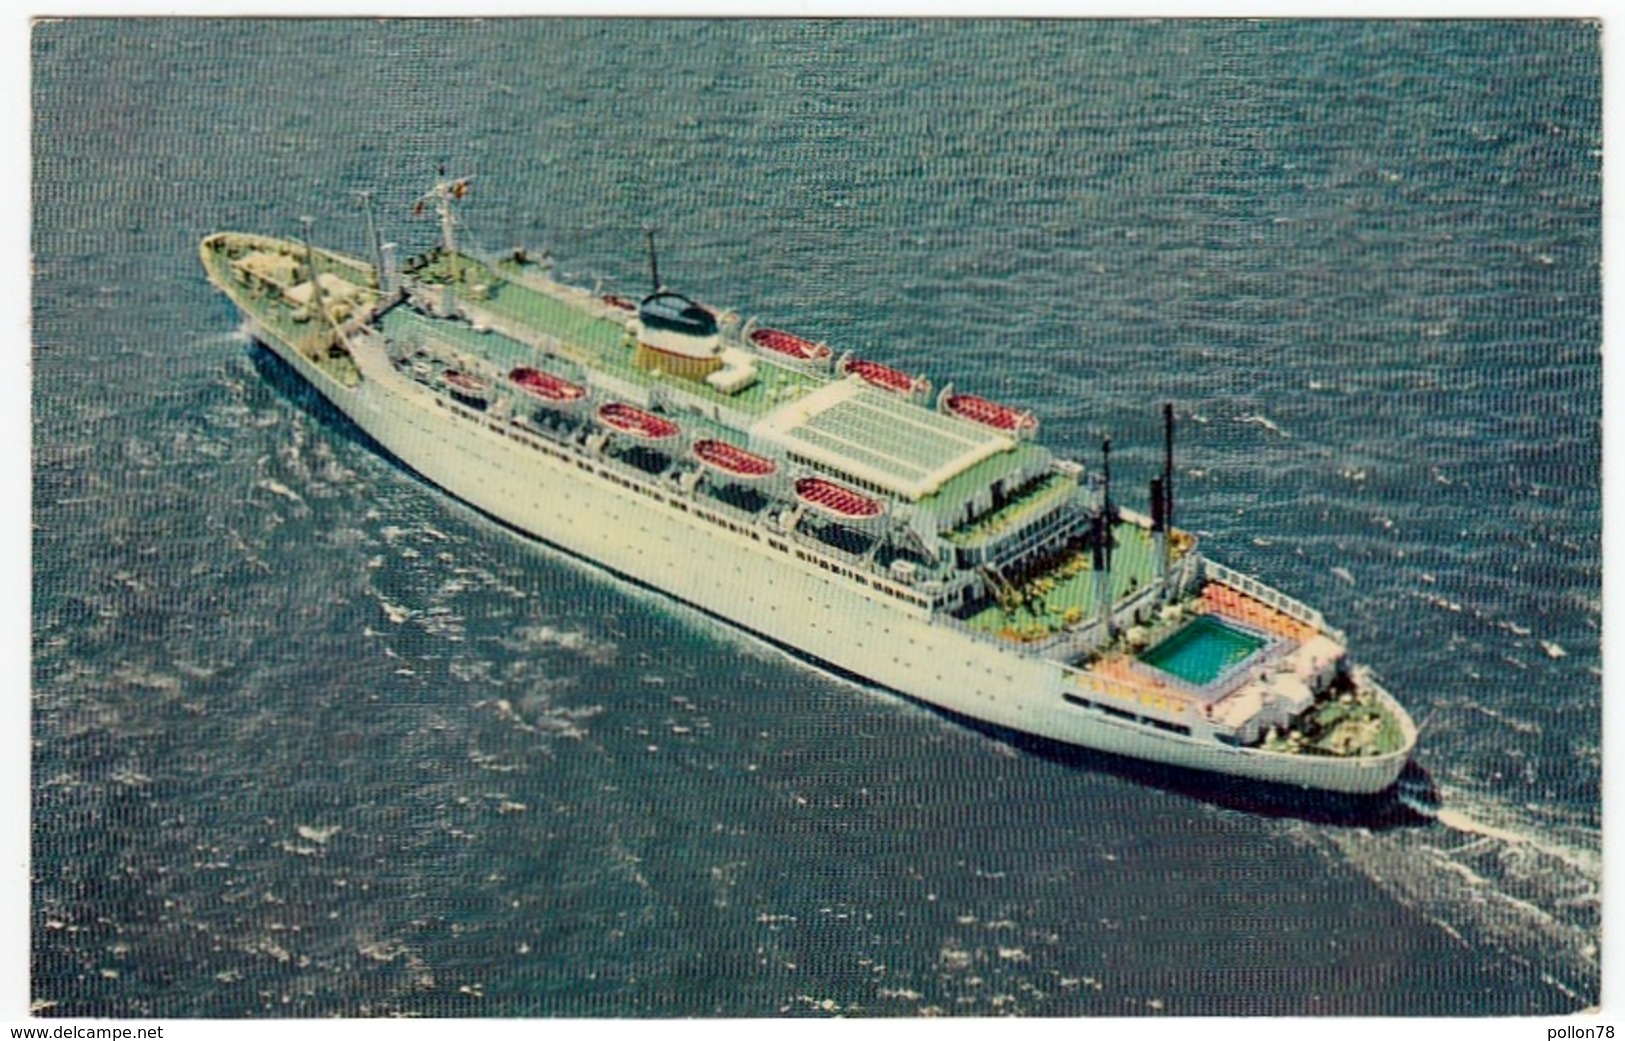 BARCHE - NAVI - S. S. ATLANTIC - AMERICAN EXPORT And ISBRANDTSEN LINES - 1964 - Vedi Retro - Commercio